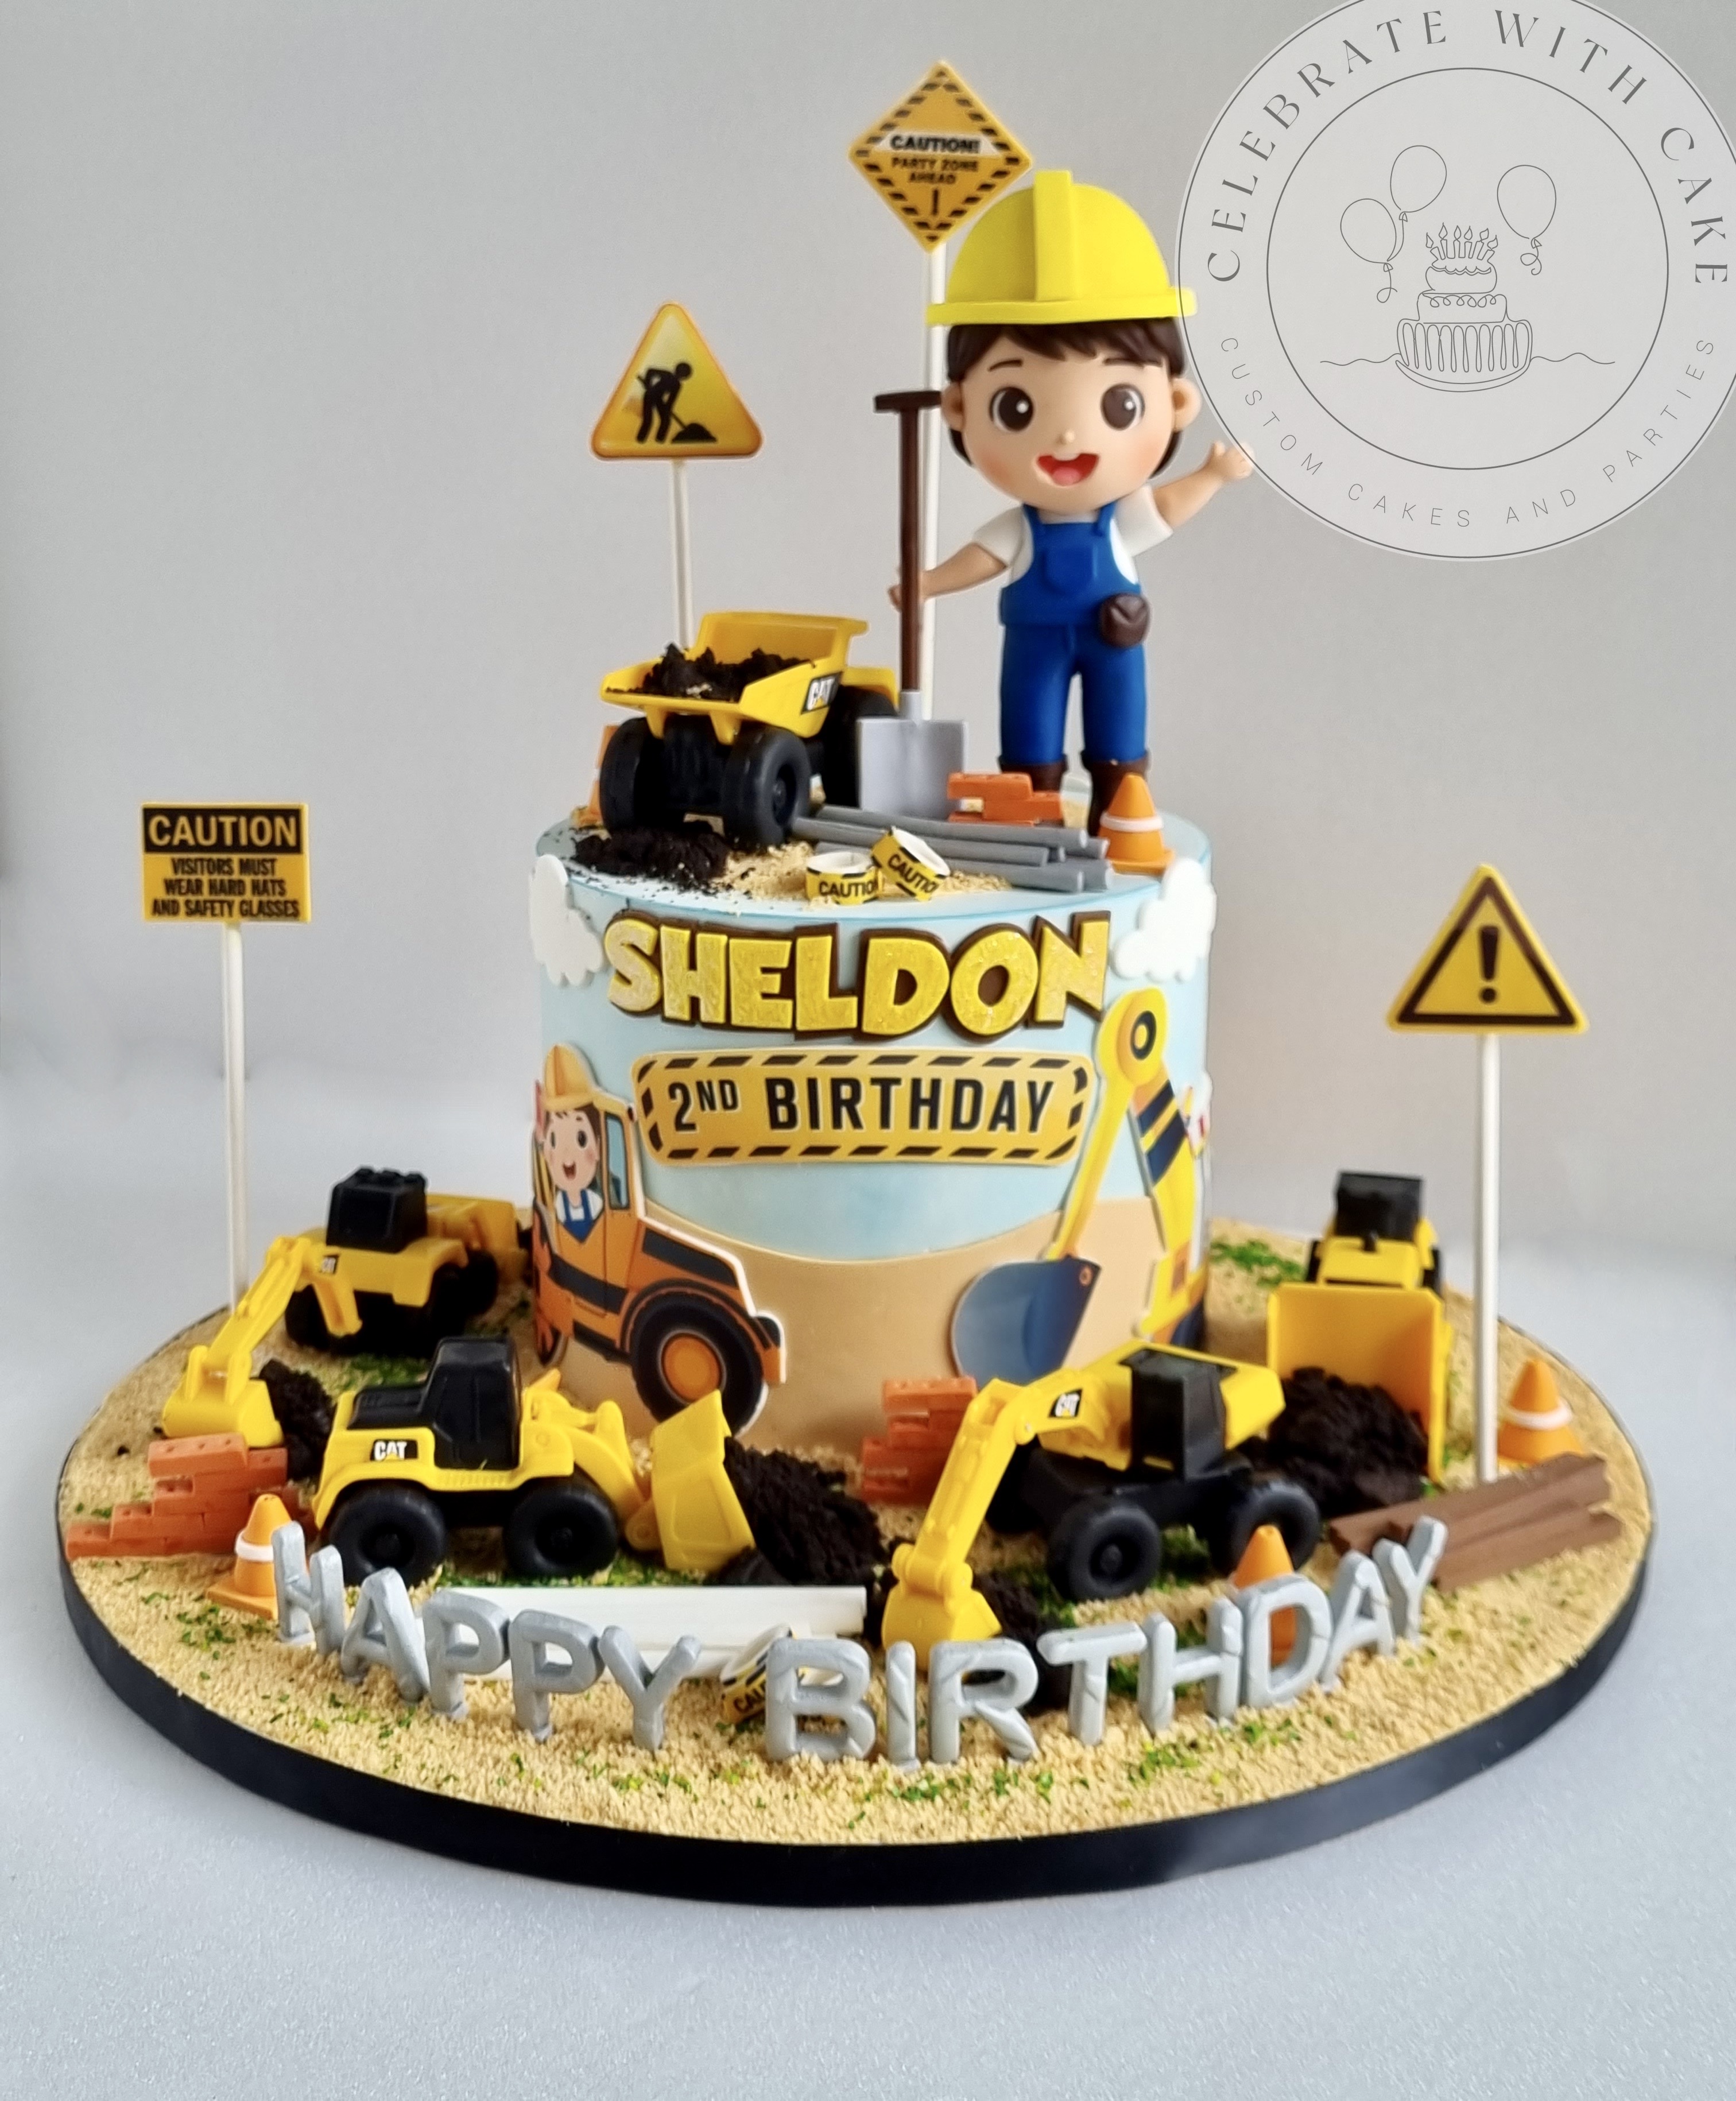 Celebrate with Cake!: Naruto themed single tier Cake